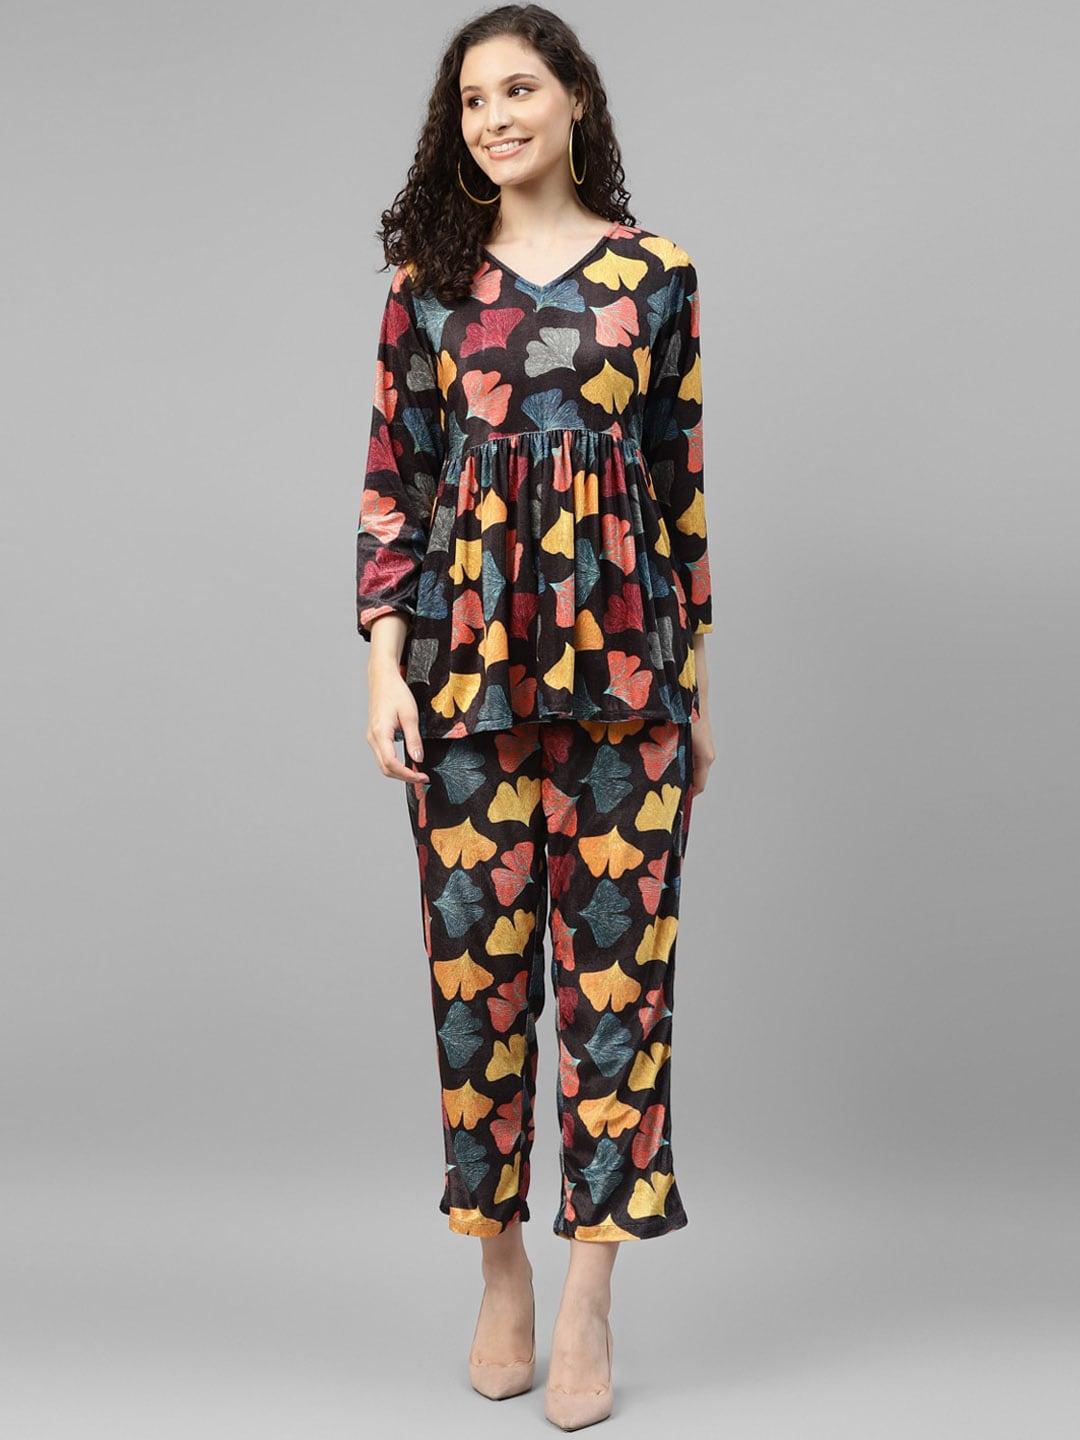 deebaco floral printed peplum style top & trouser